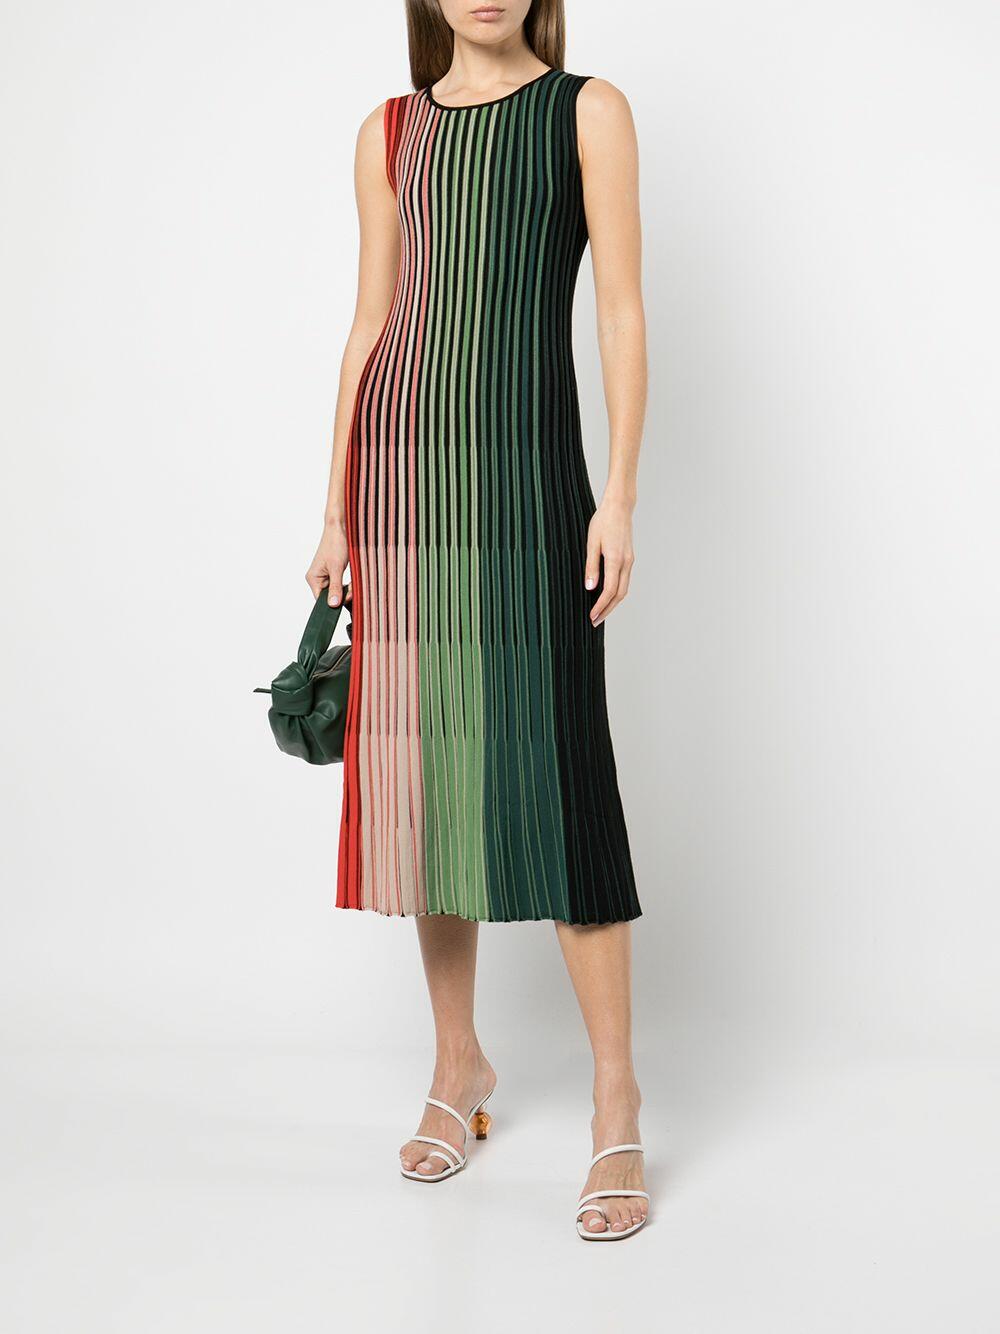 Akris Punto - Multicolor Stripe Sleeveless Fitted Dress